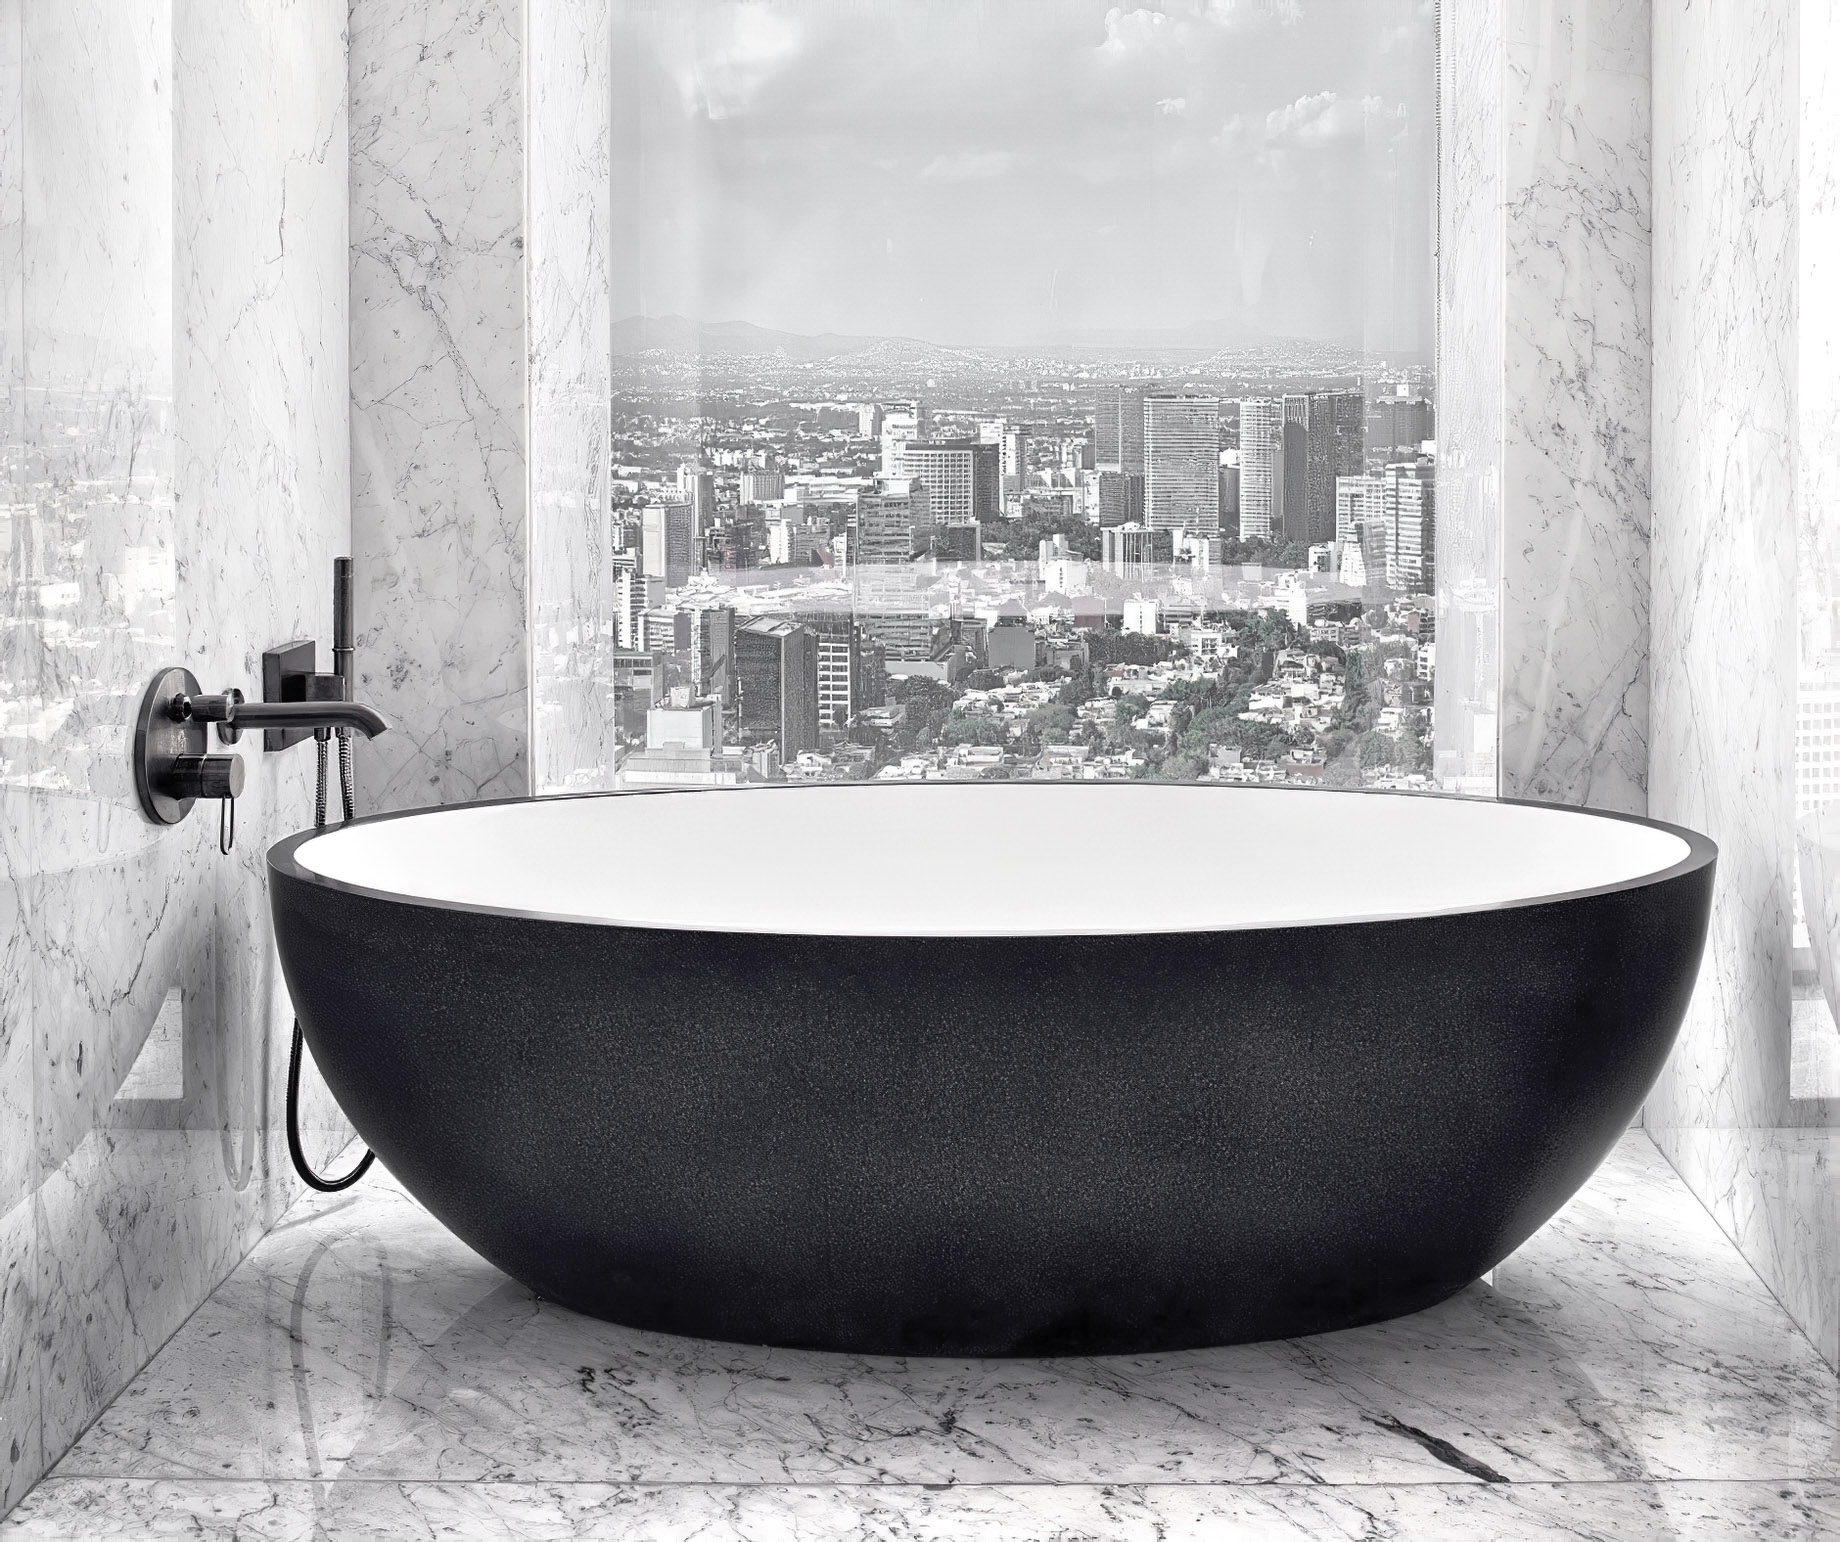 The Ritz-Carlton, Mexico City Hotel – Mexico City, Mexico – Suite Bathroom Tub